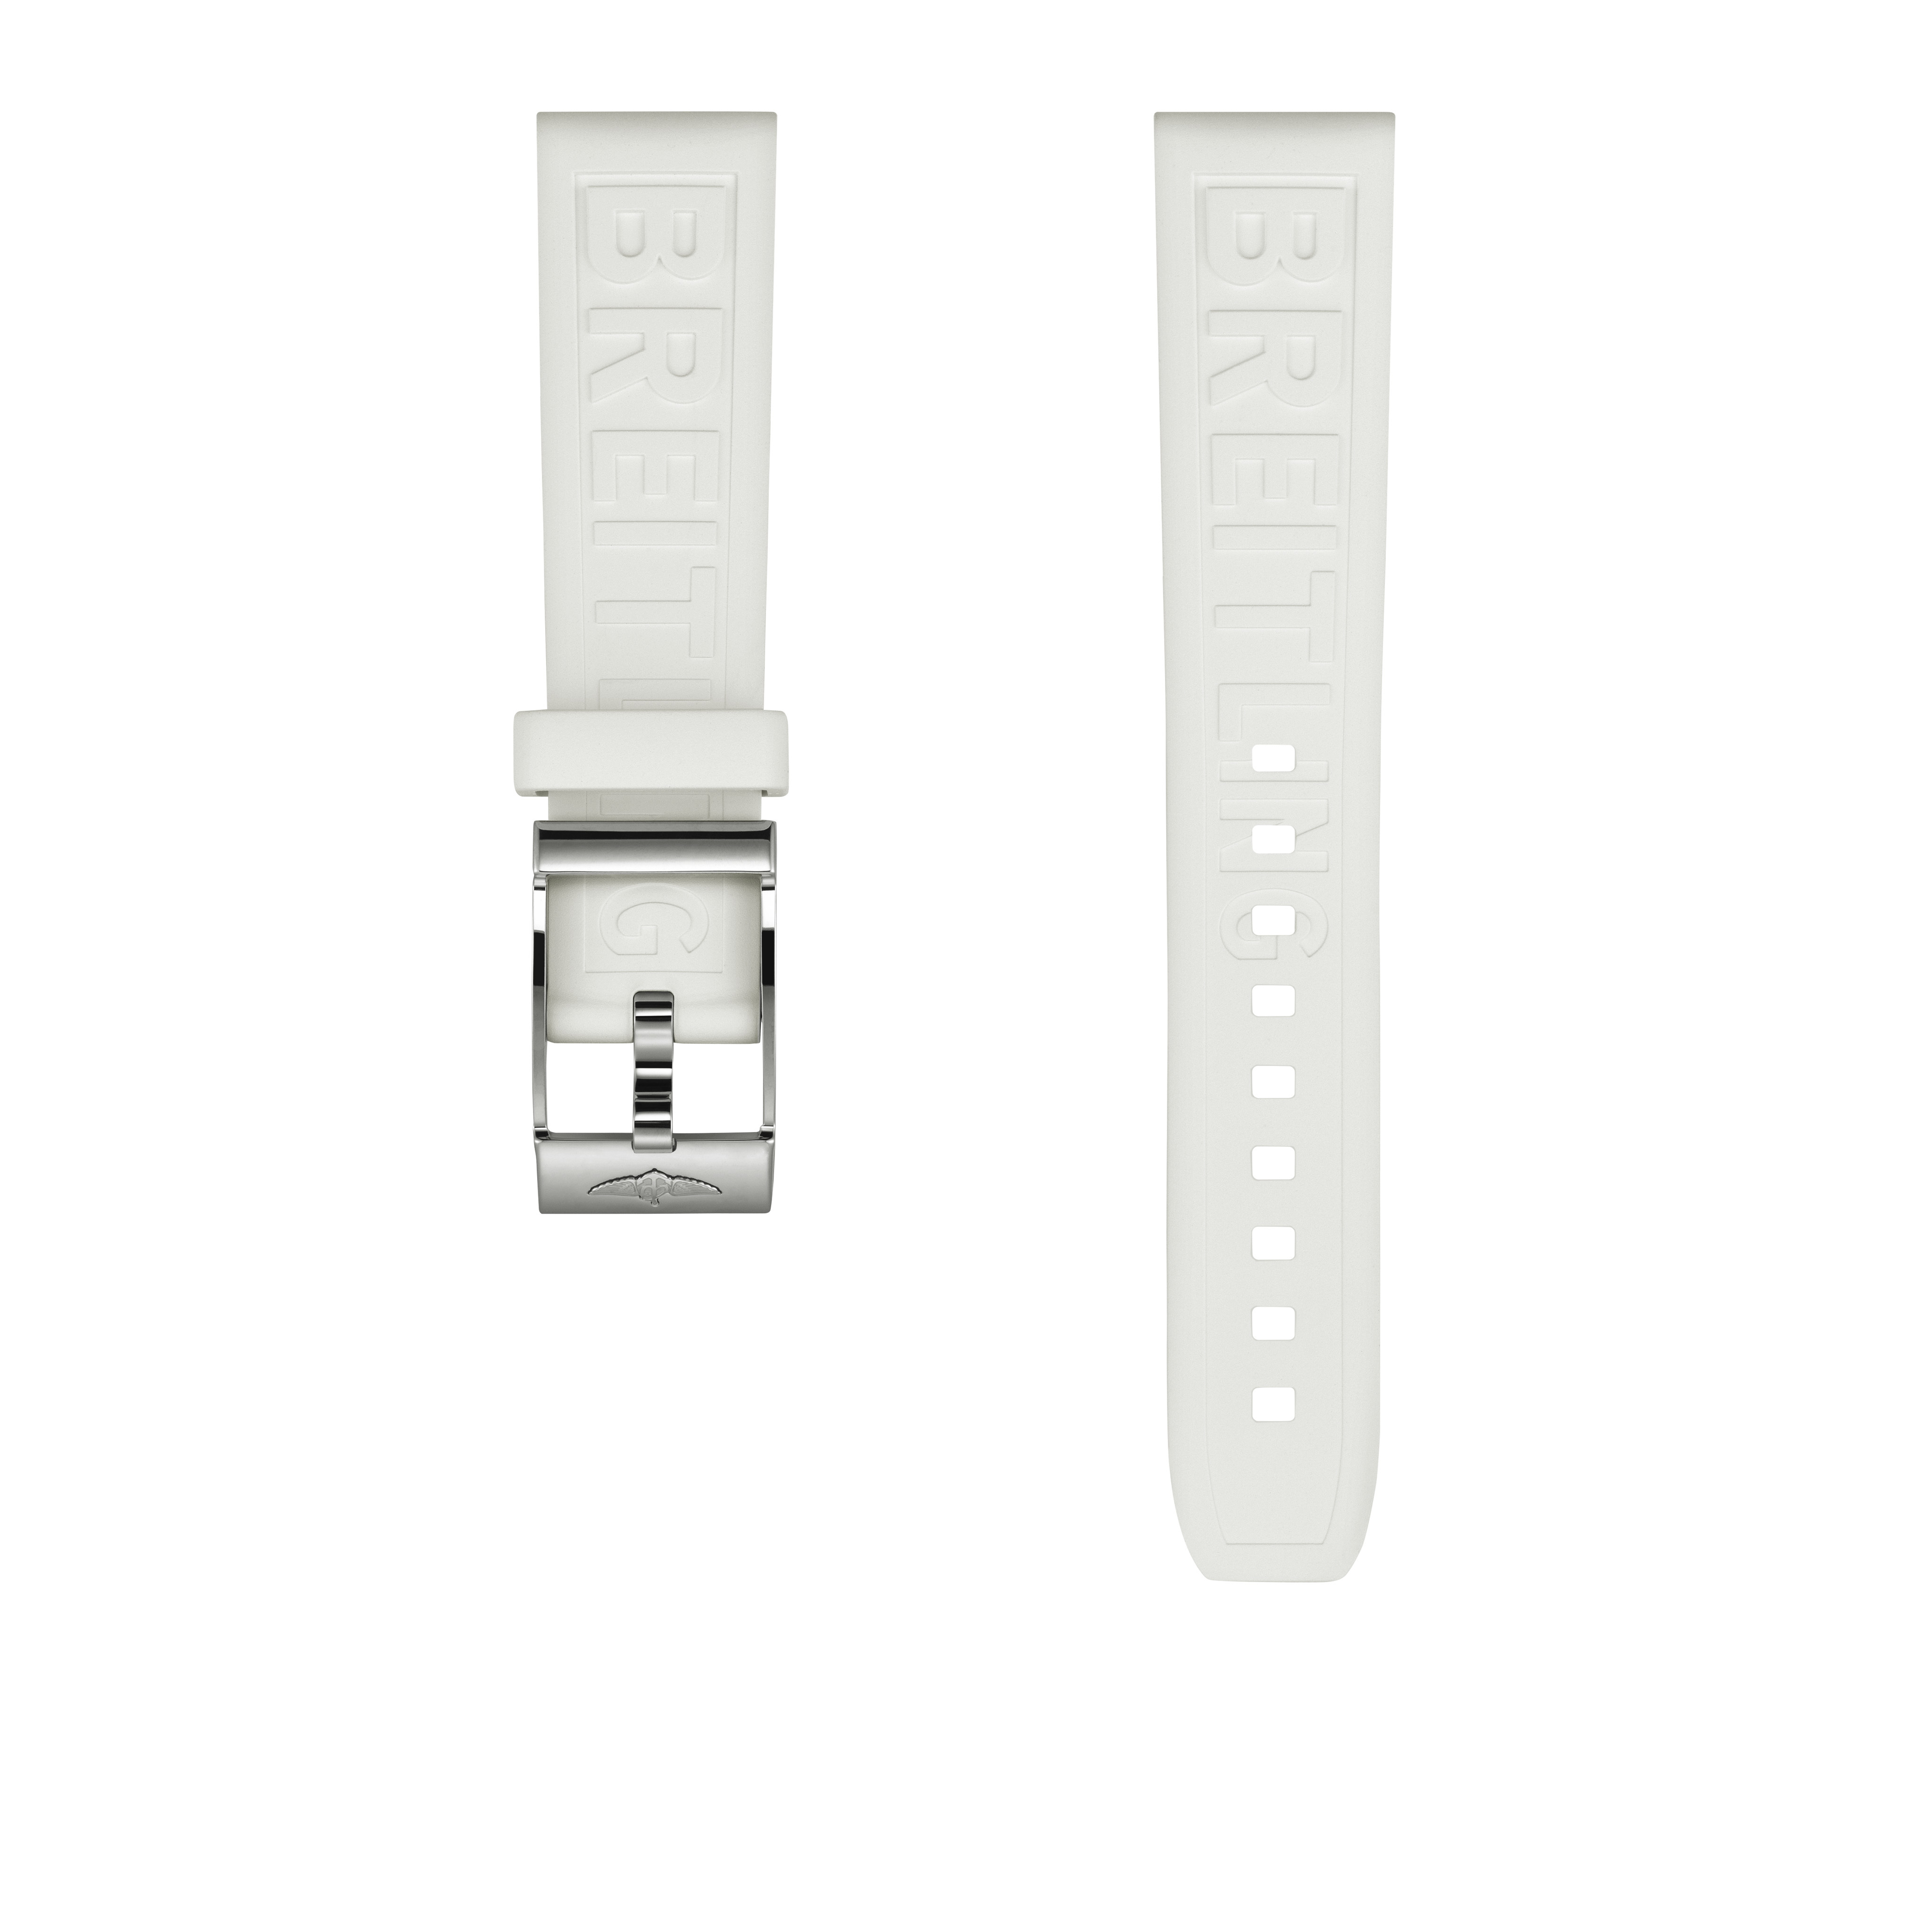 Bracelete de borracha Diver Pro branca - 18 mm